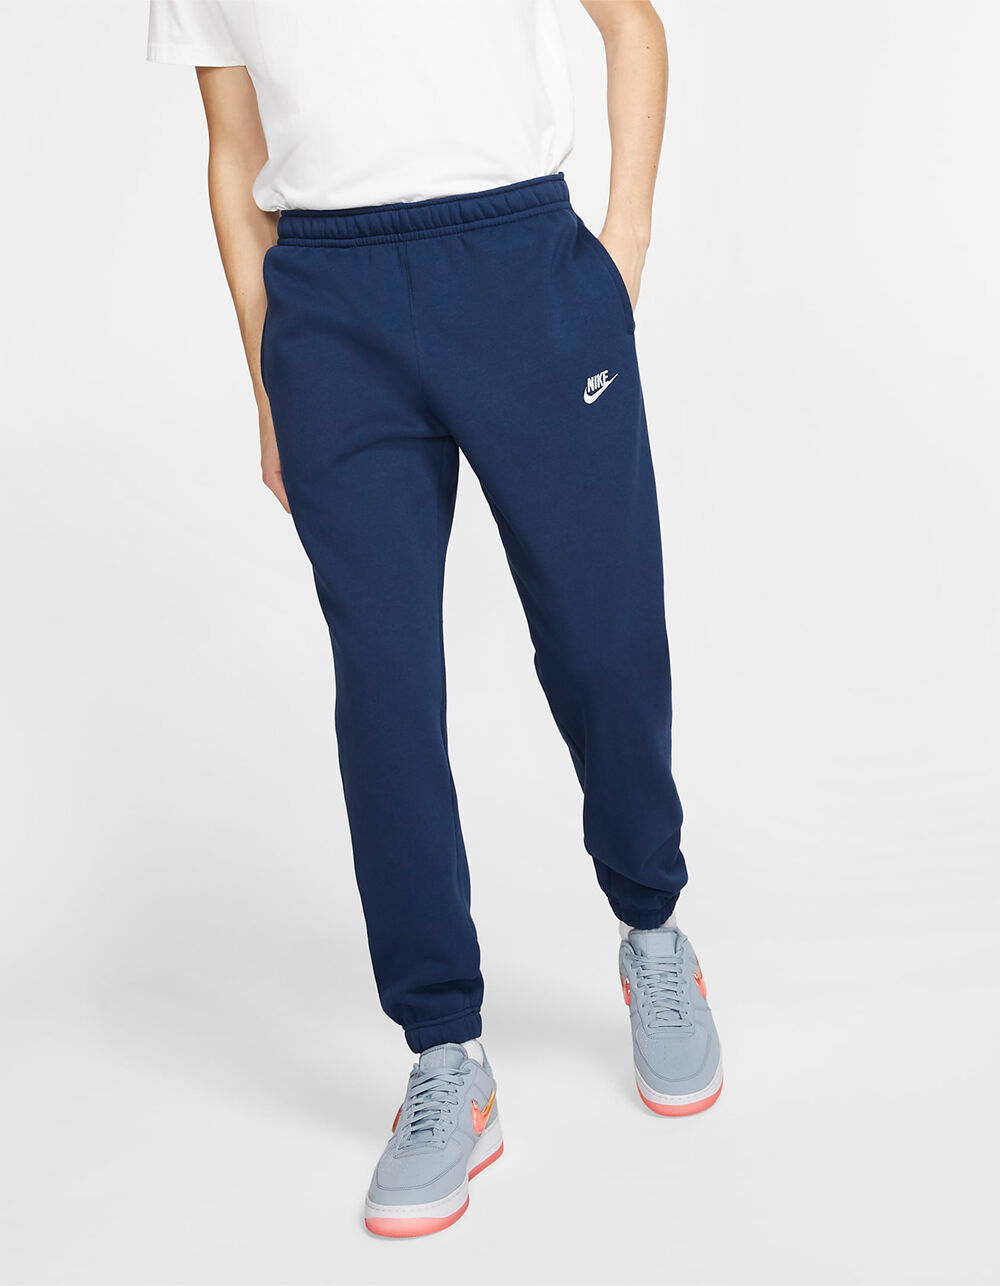 Nike Mens Sportswear Sweatpants Straight Leg Navy Size Navy Classic